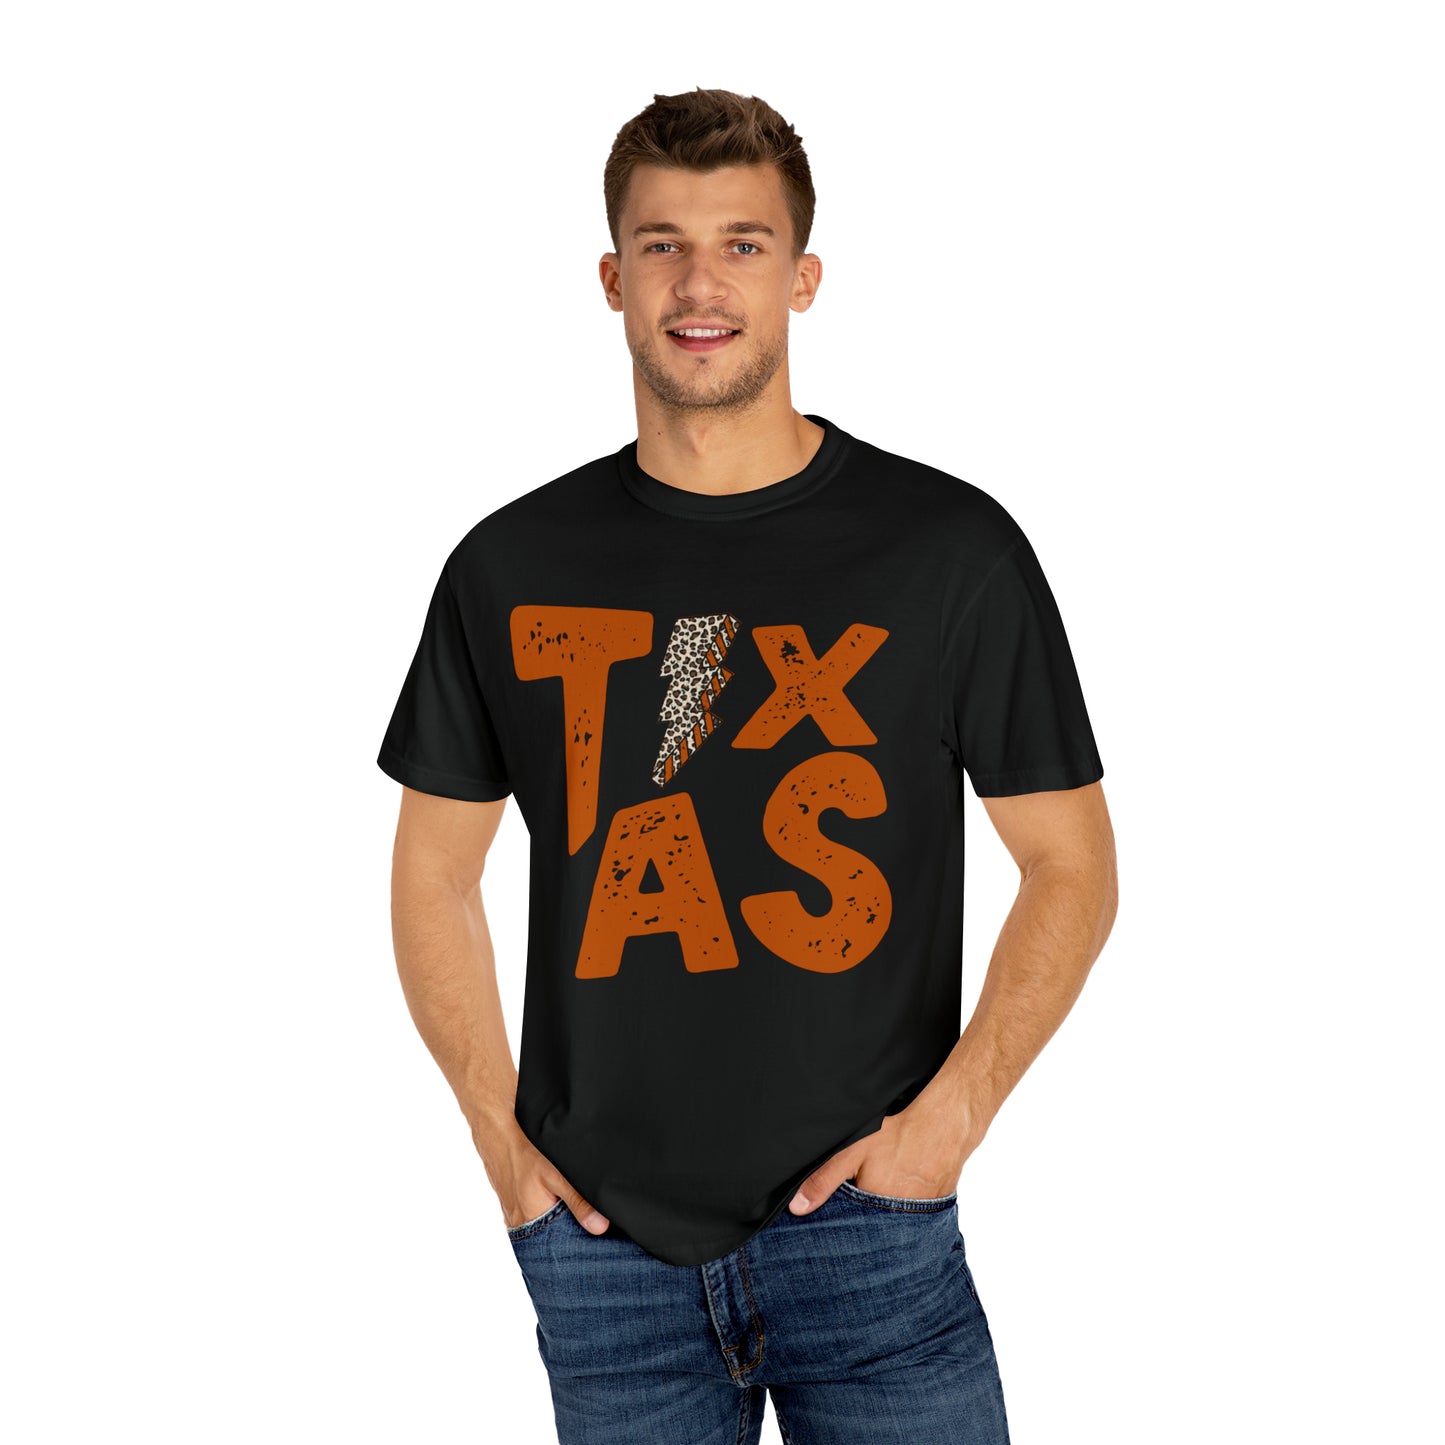 Texas Lightning Bolt Shirt